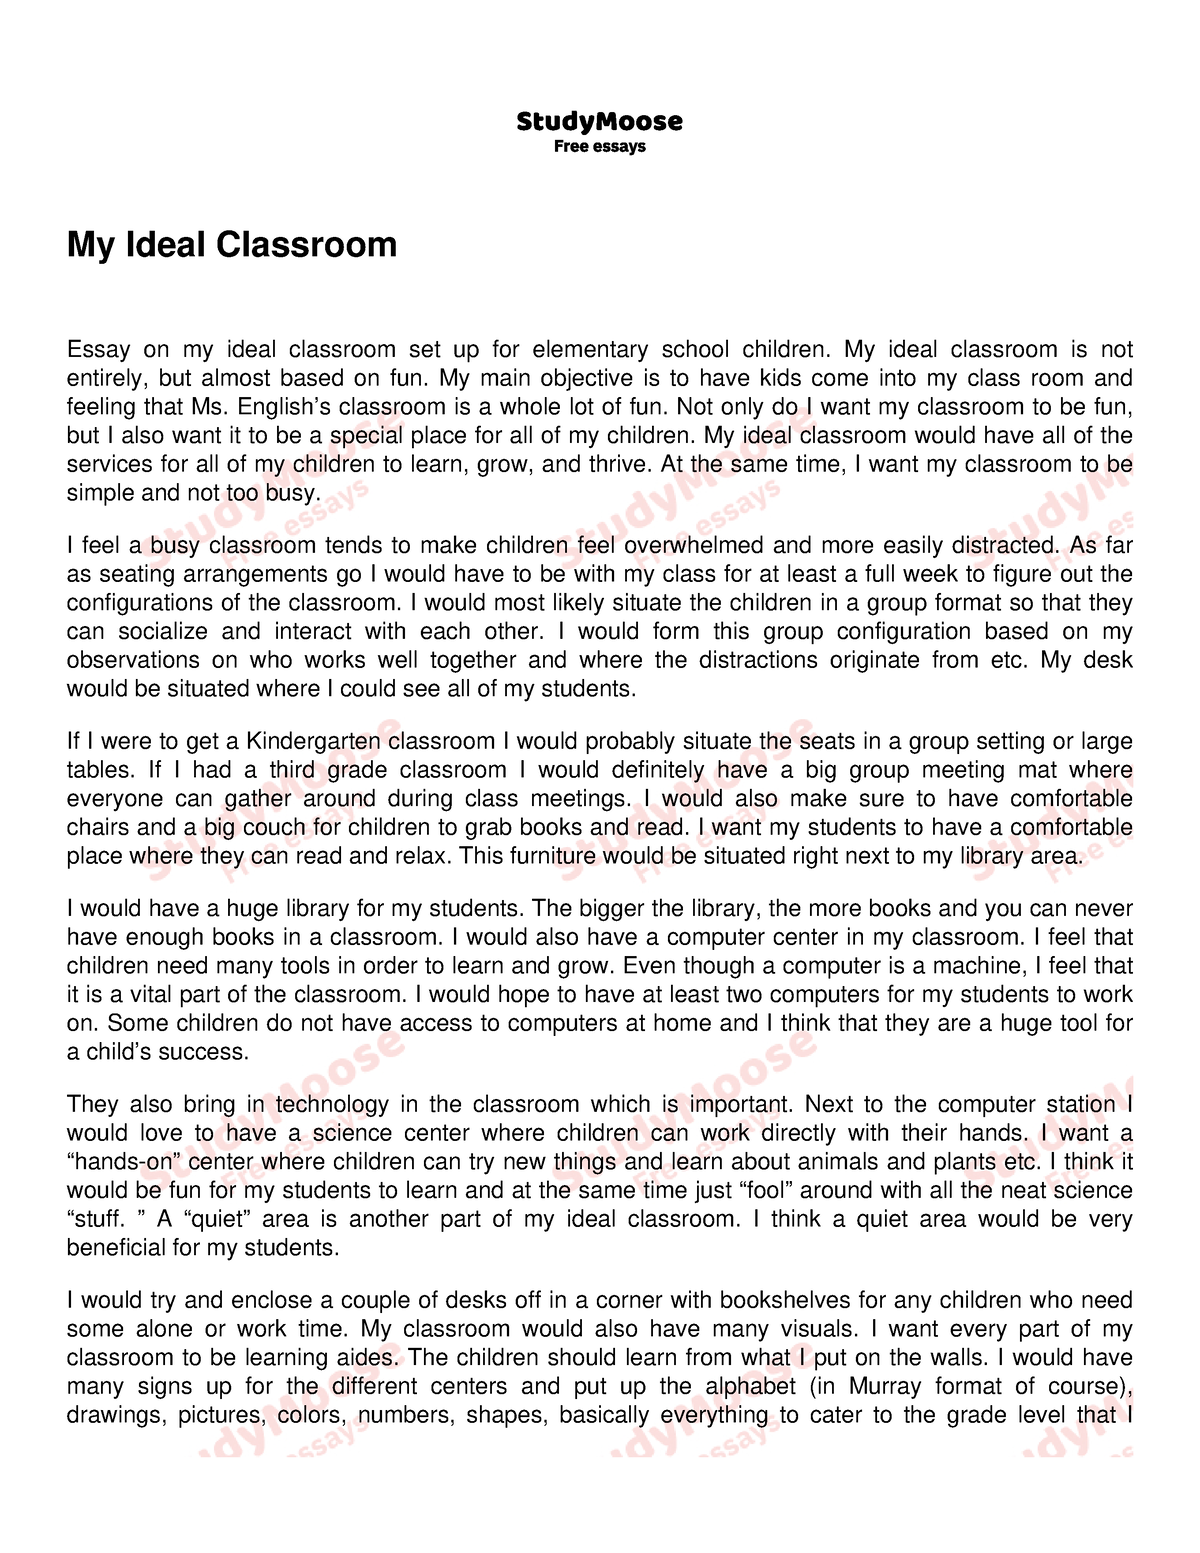 my classroom essay 150 words